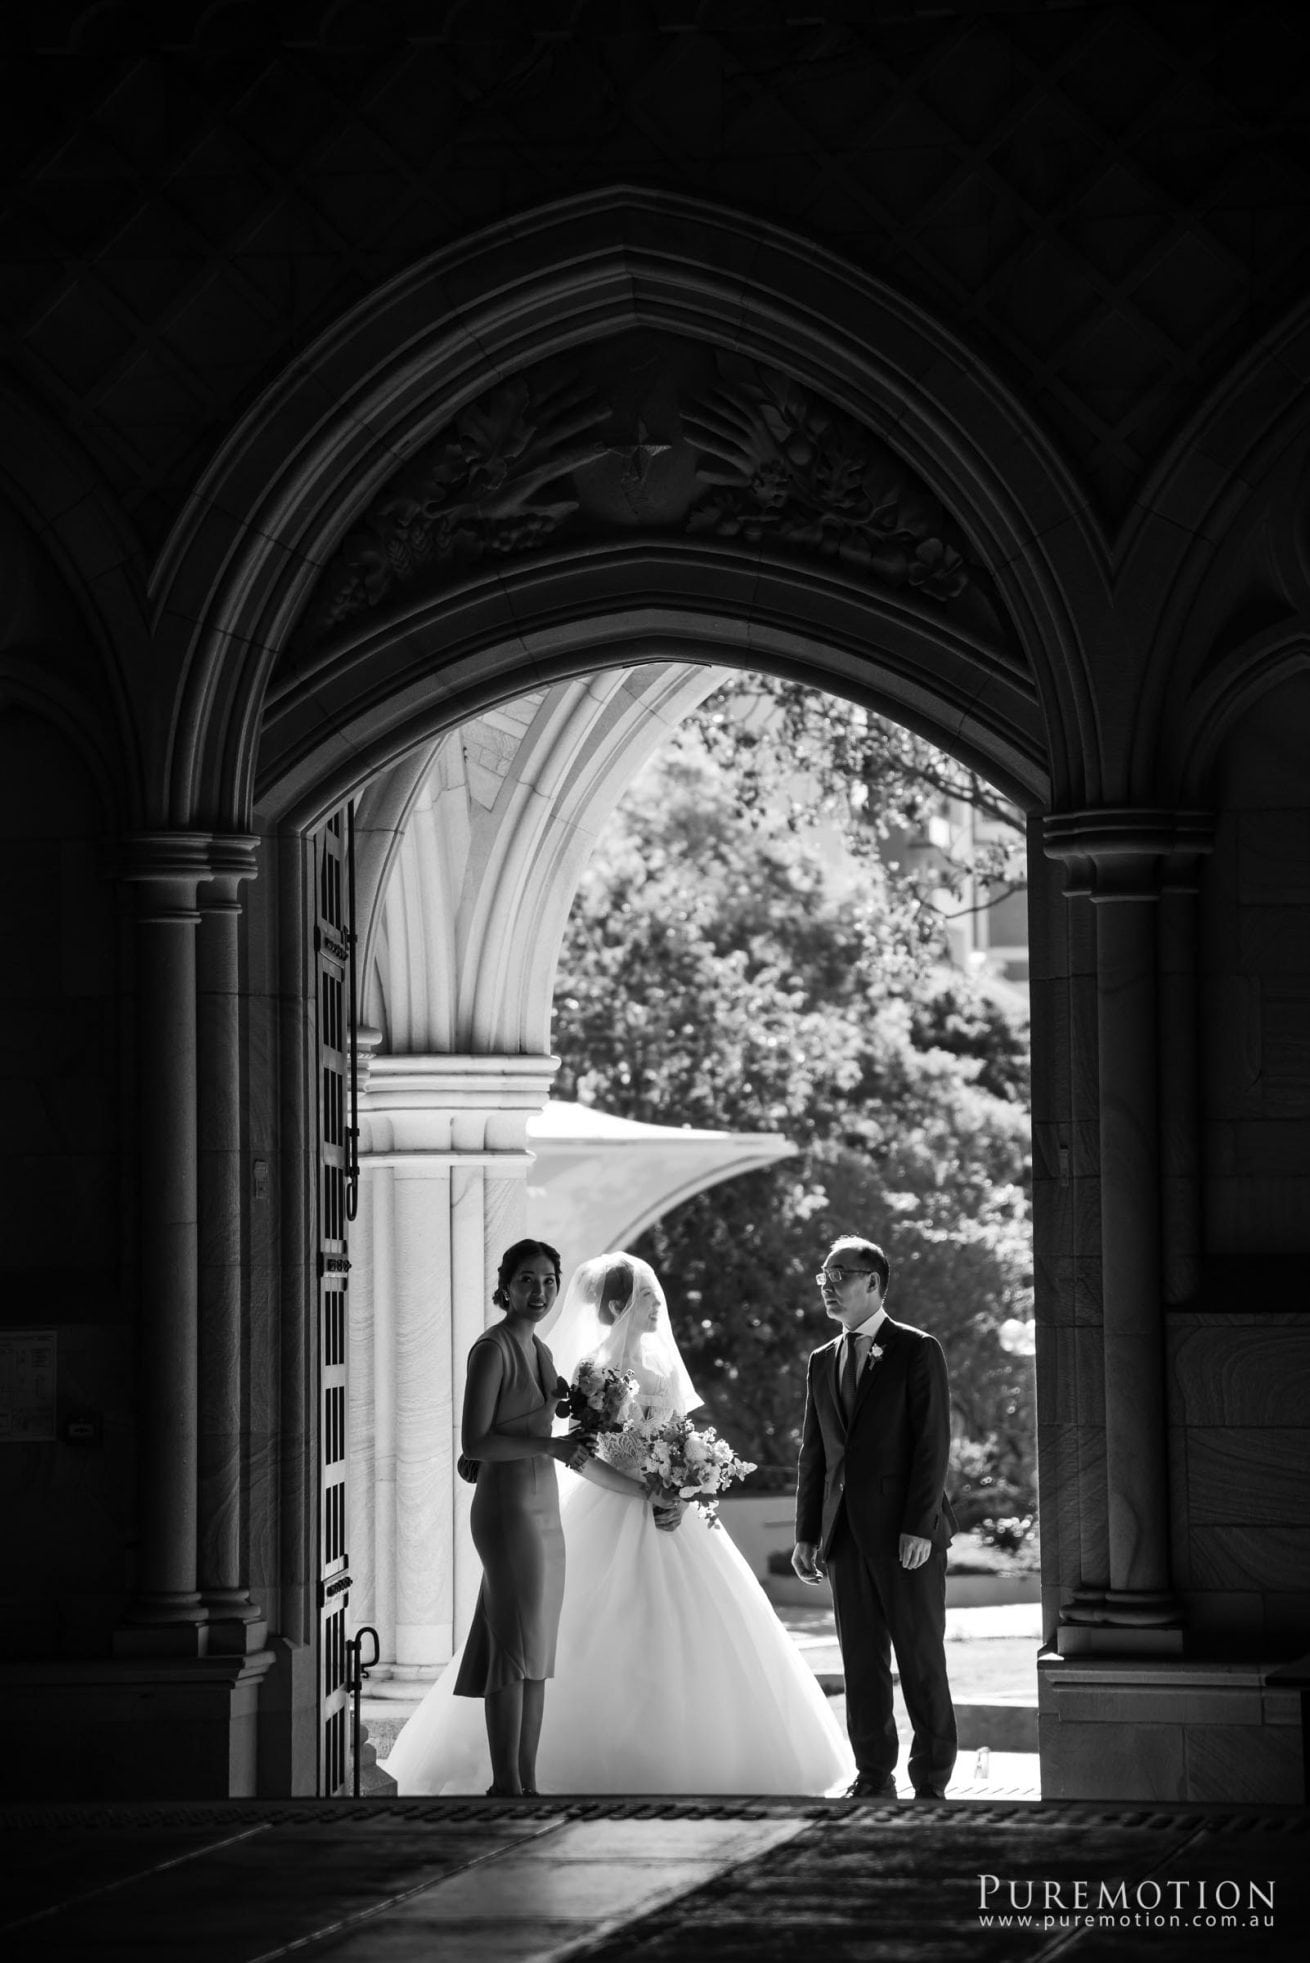 180818 Puremotion Wedding Photography Brisbane Alex Huang MichelleConan Room 360_Site-0055